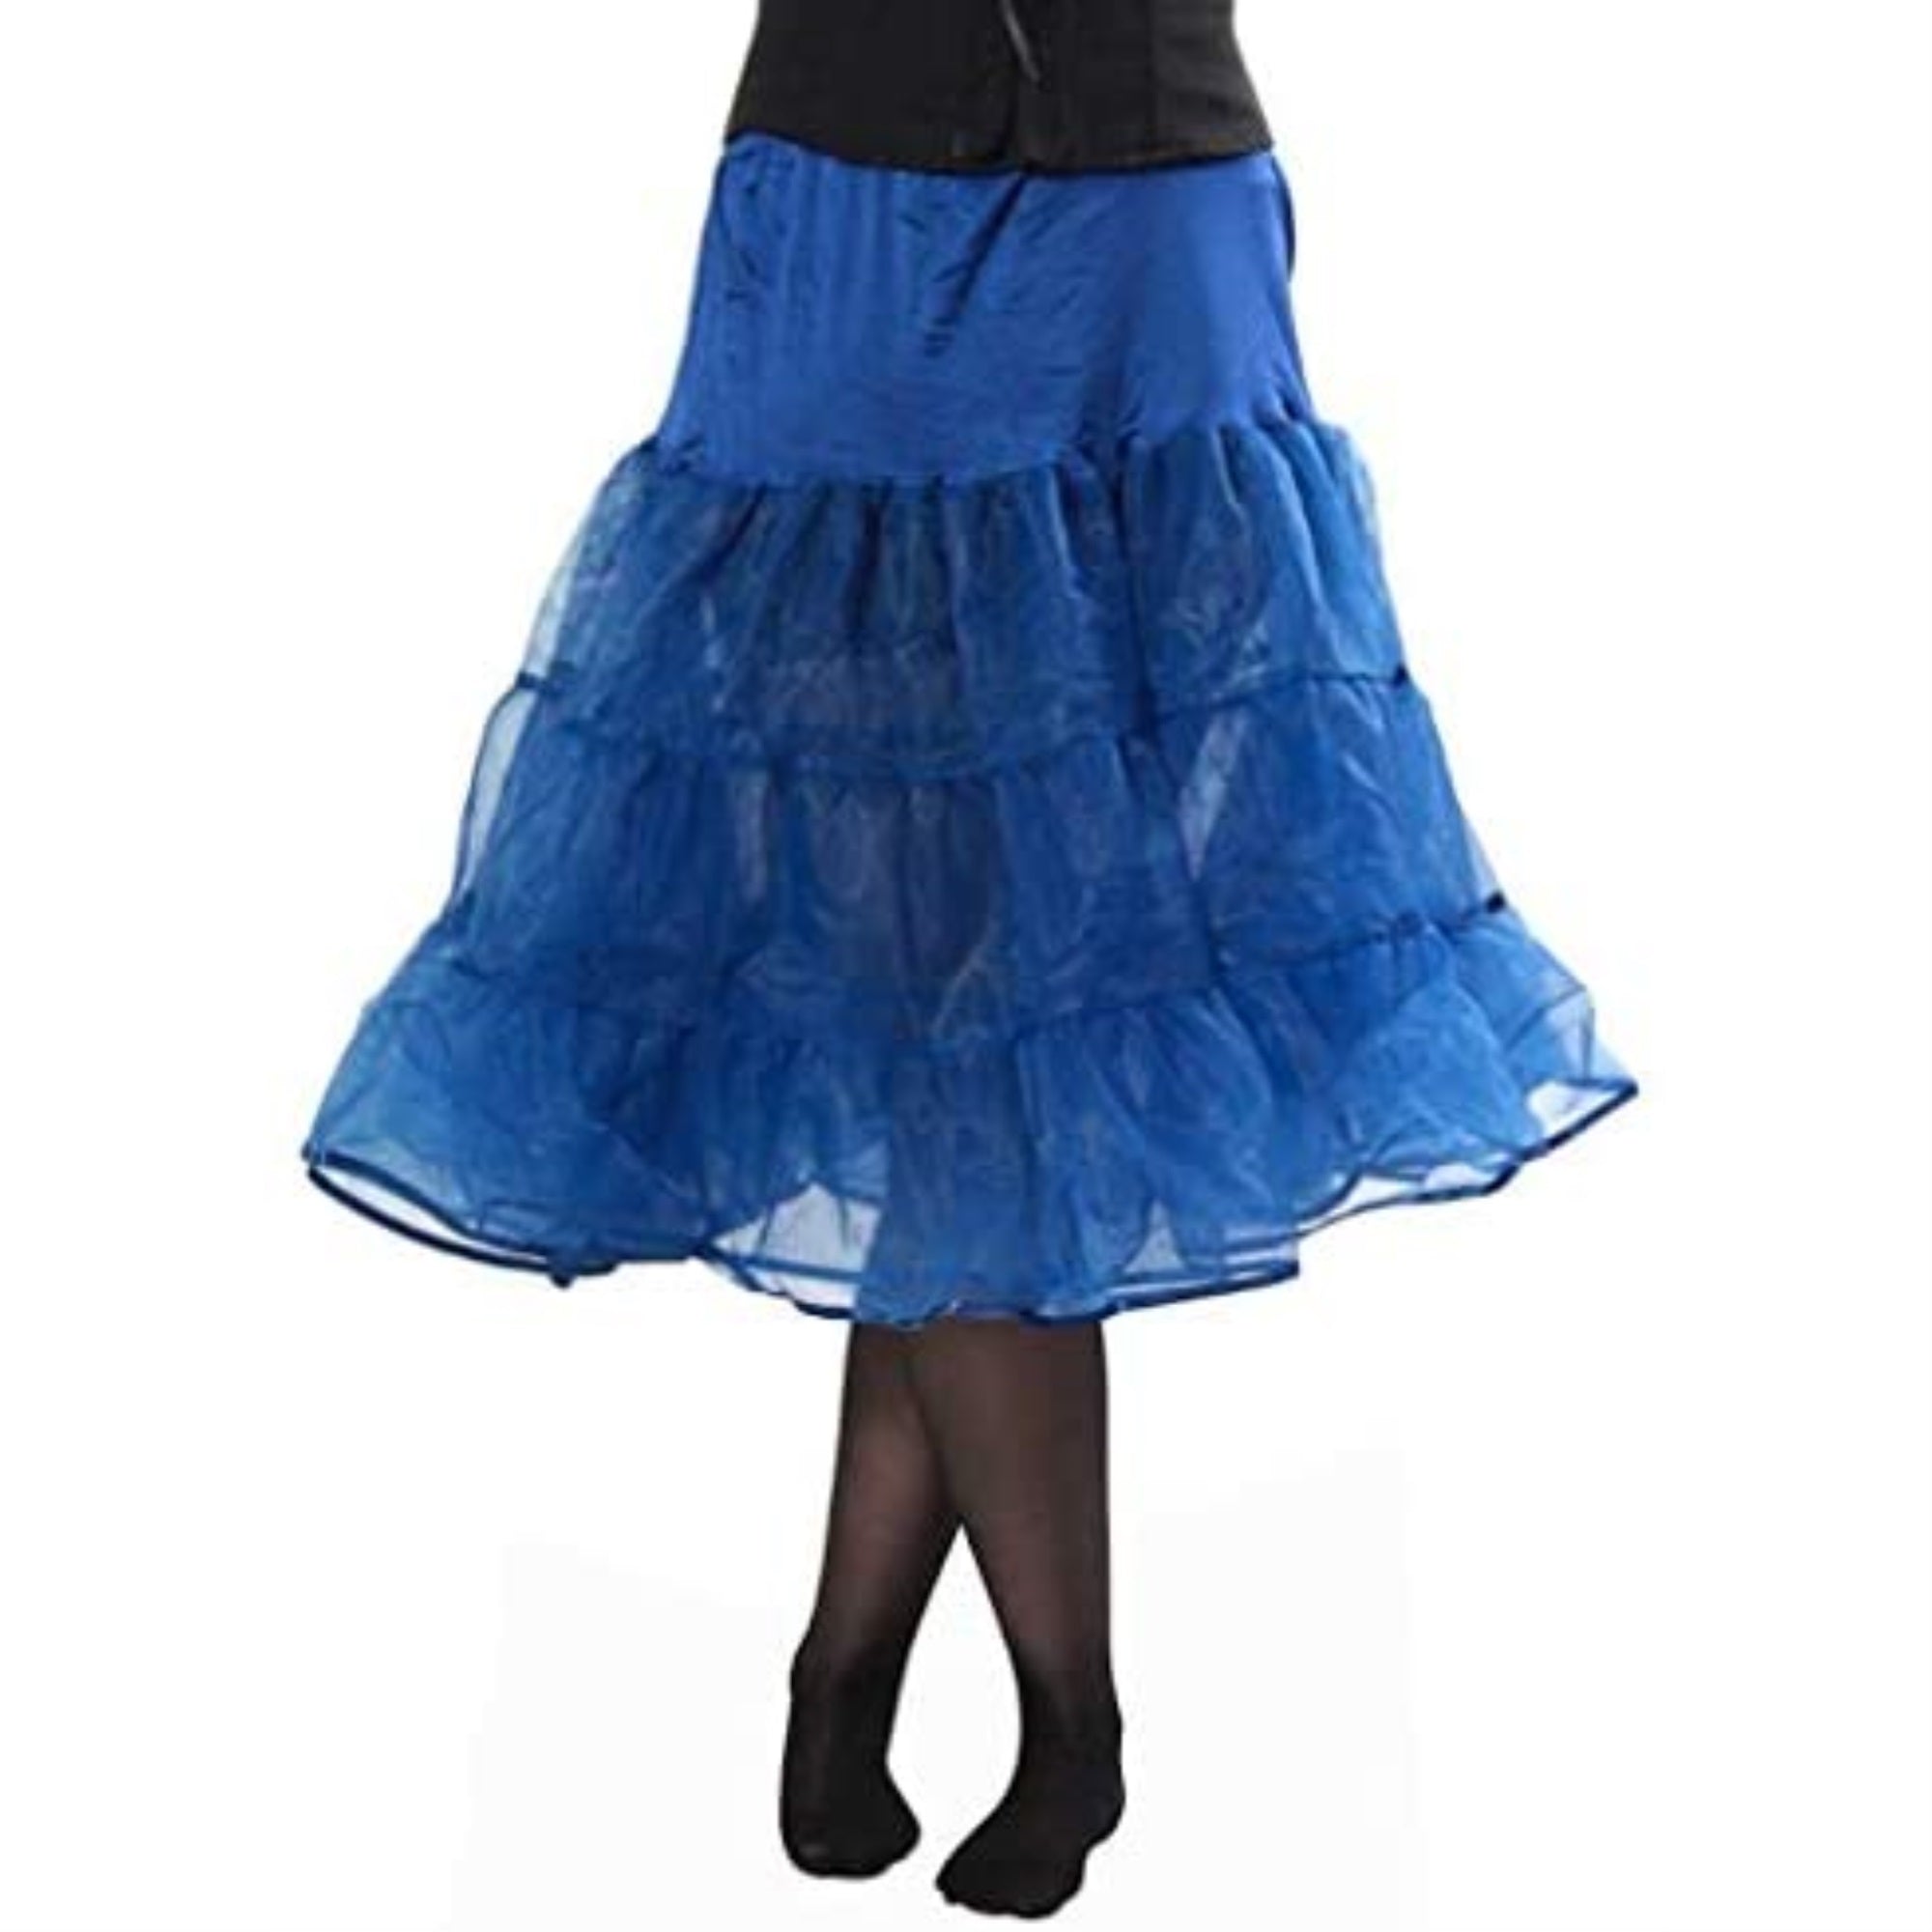 417 Women's Sexy Tea Length Petticoat for Poodle -Royal Blue